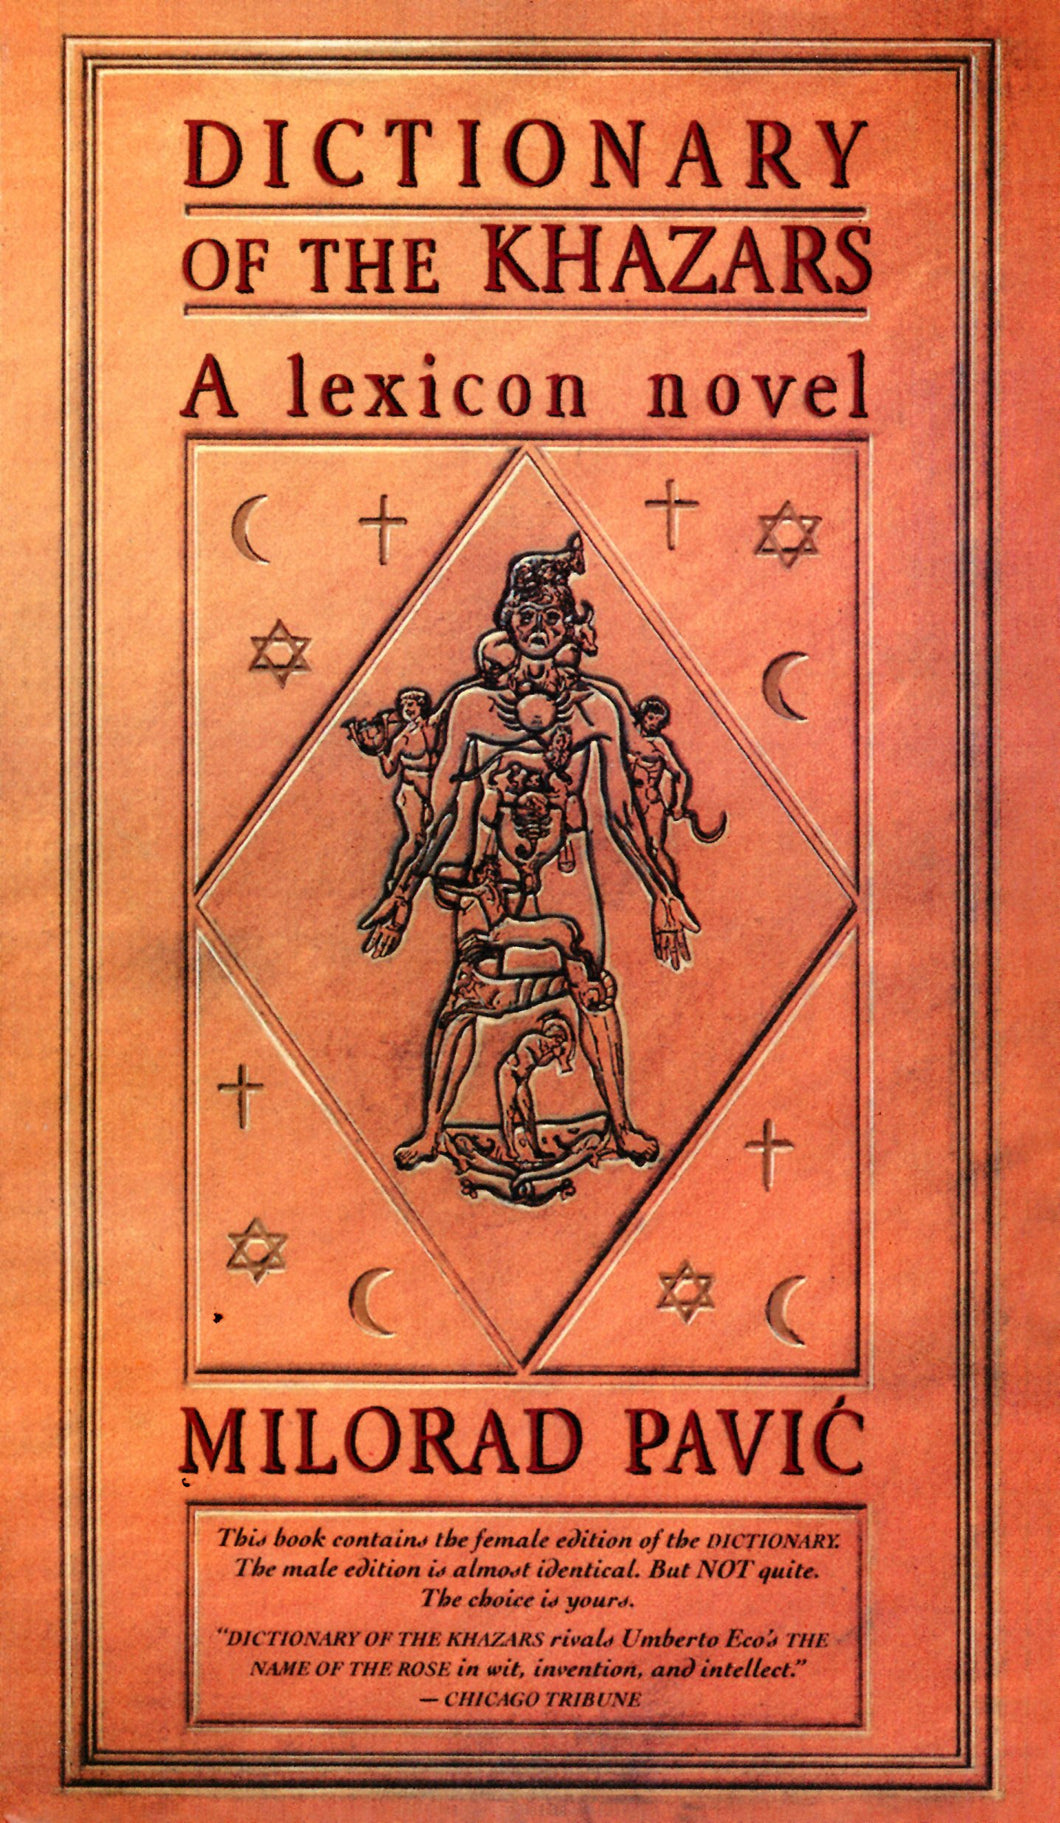 Dictionary of the Khazars: A Lexicon Novel in 100,000 Words ร้านหนังสือและสิ่งของ เป็นร้านหนังสือภาษาอังกฤษหายาก และร้านกาแฟ หรือ บุ๊คคาเฟ่ ตั้งอยู่สุขุมวิท กรุงเทพ